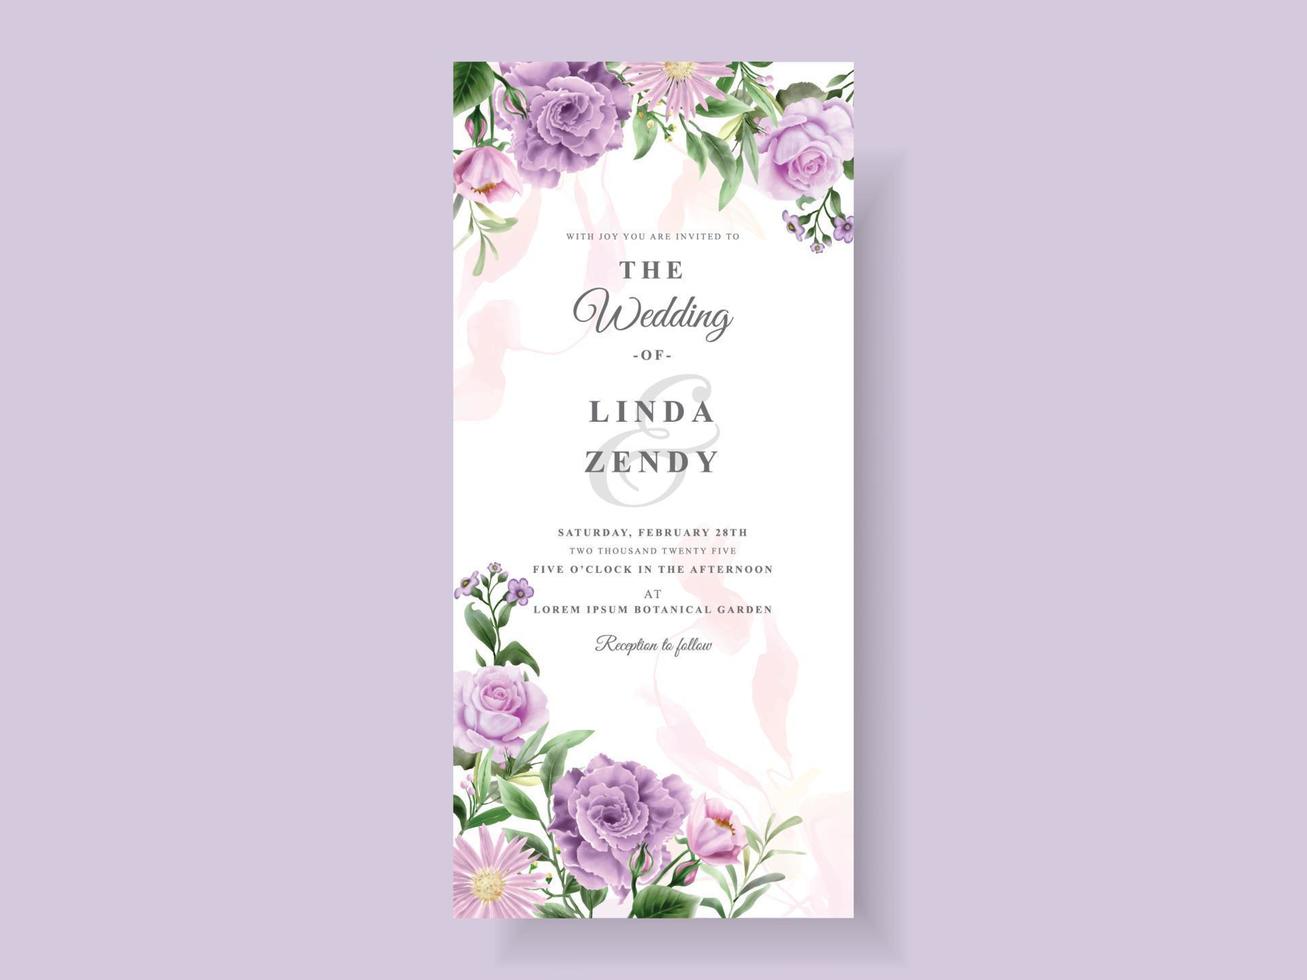 Beautiful purple flowers wedding invitation card template vector